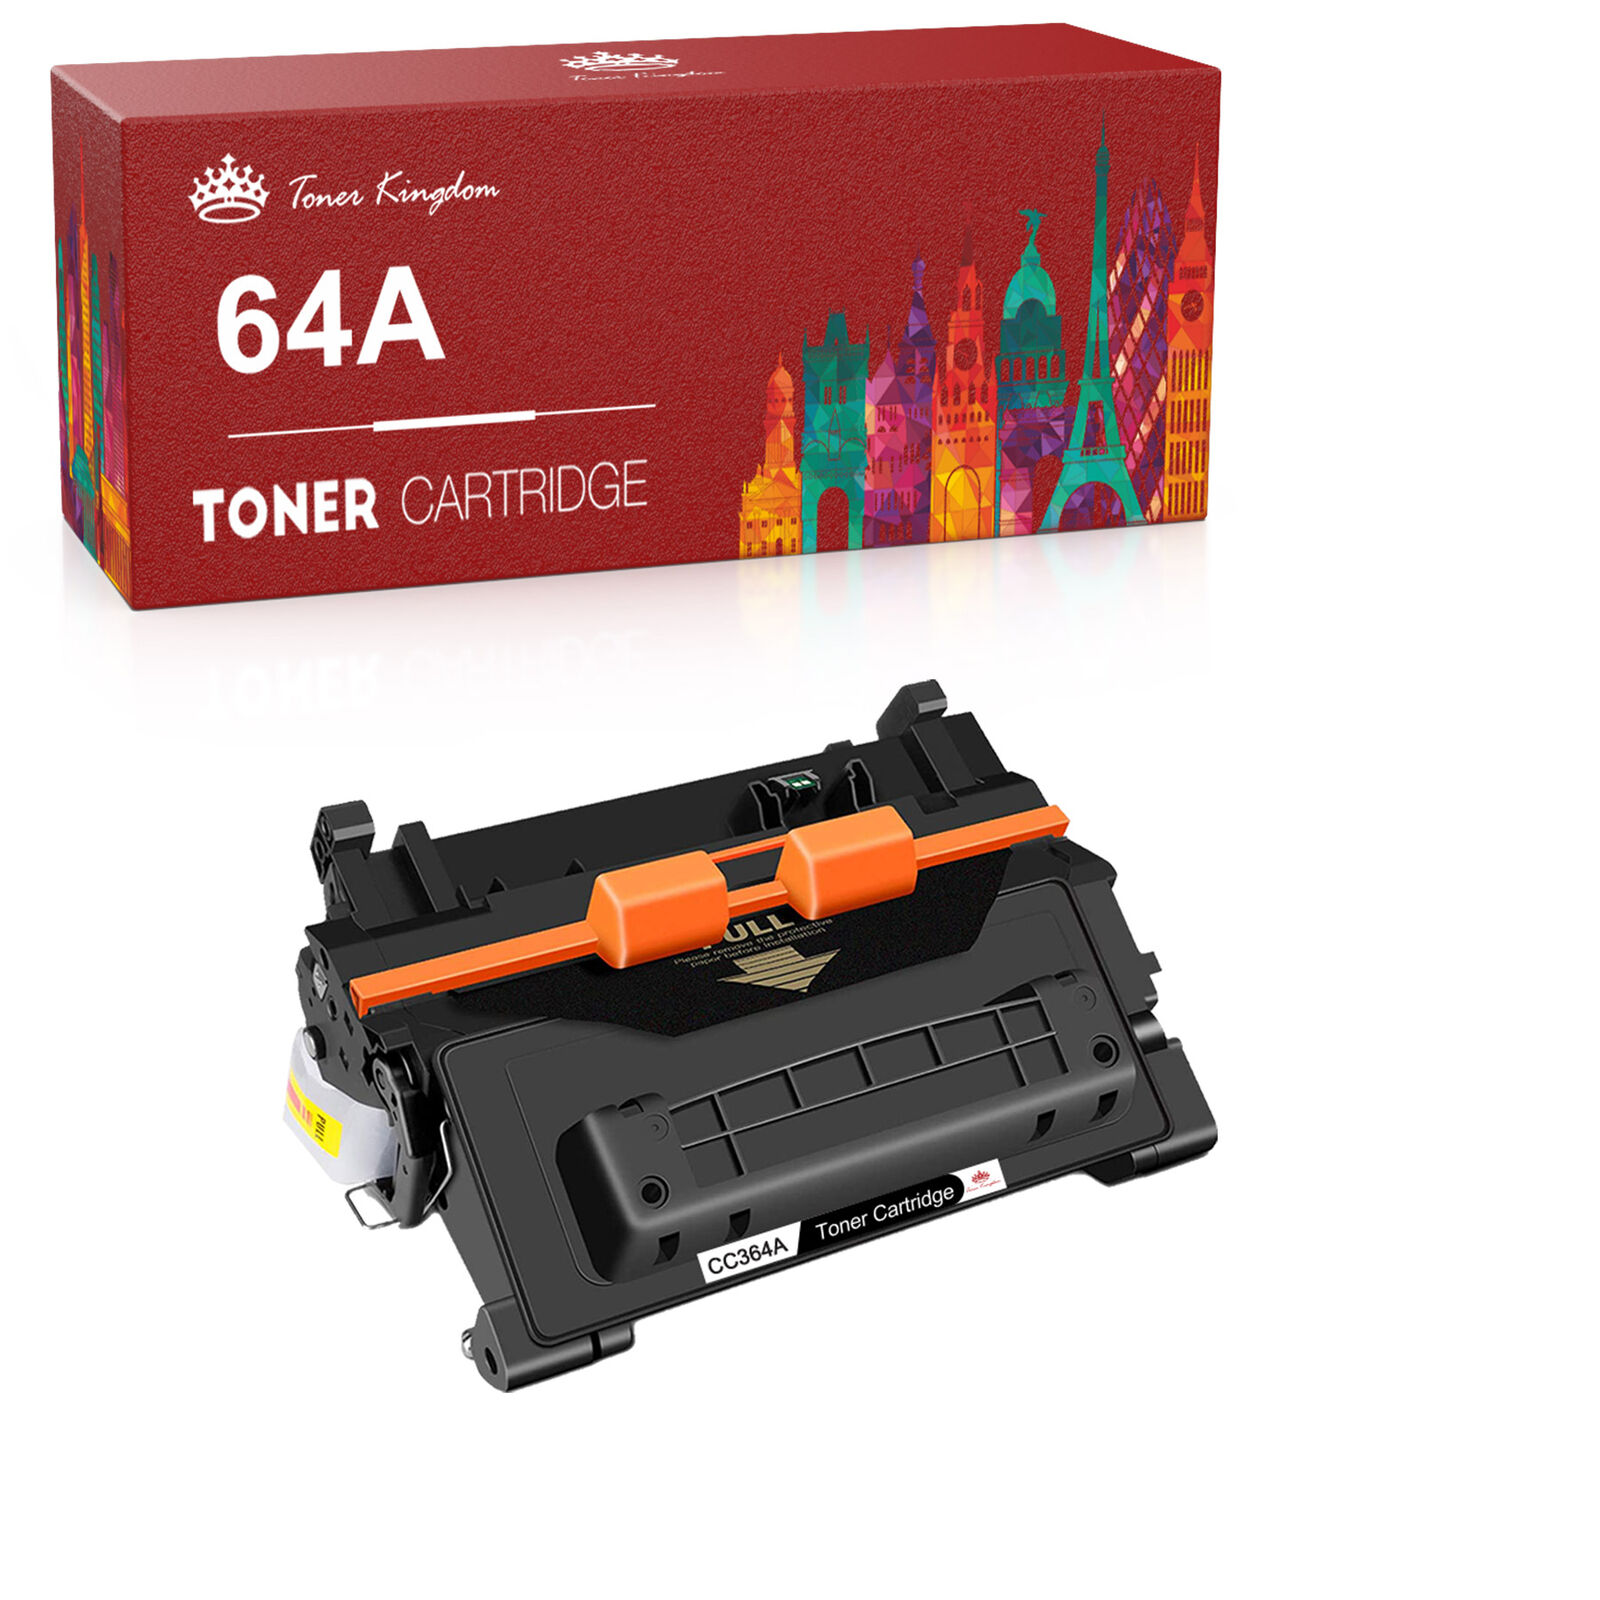 1Pc CC364A 64A Toner Cartridge replacement for HP LaserJet P4515DN P4515TN P4015